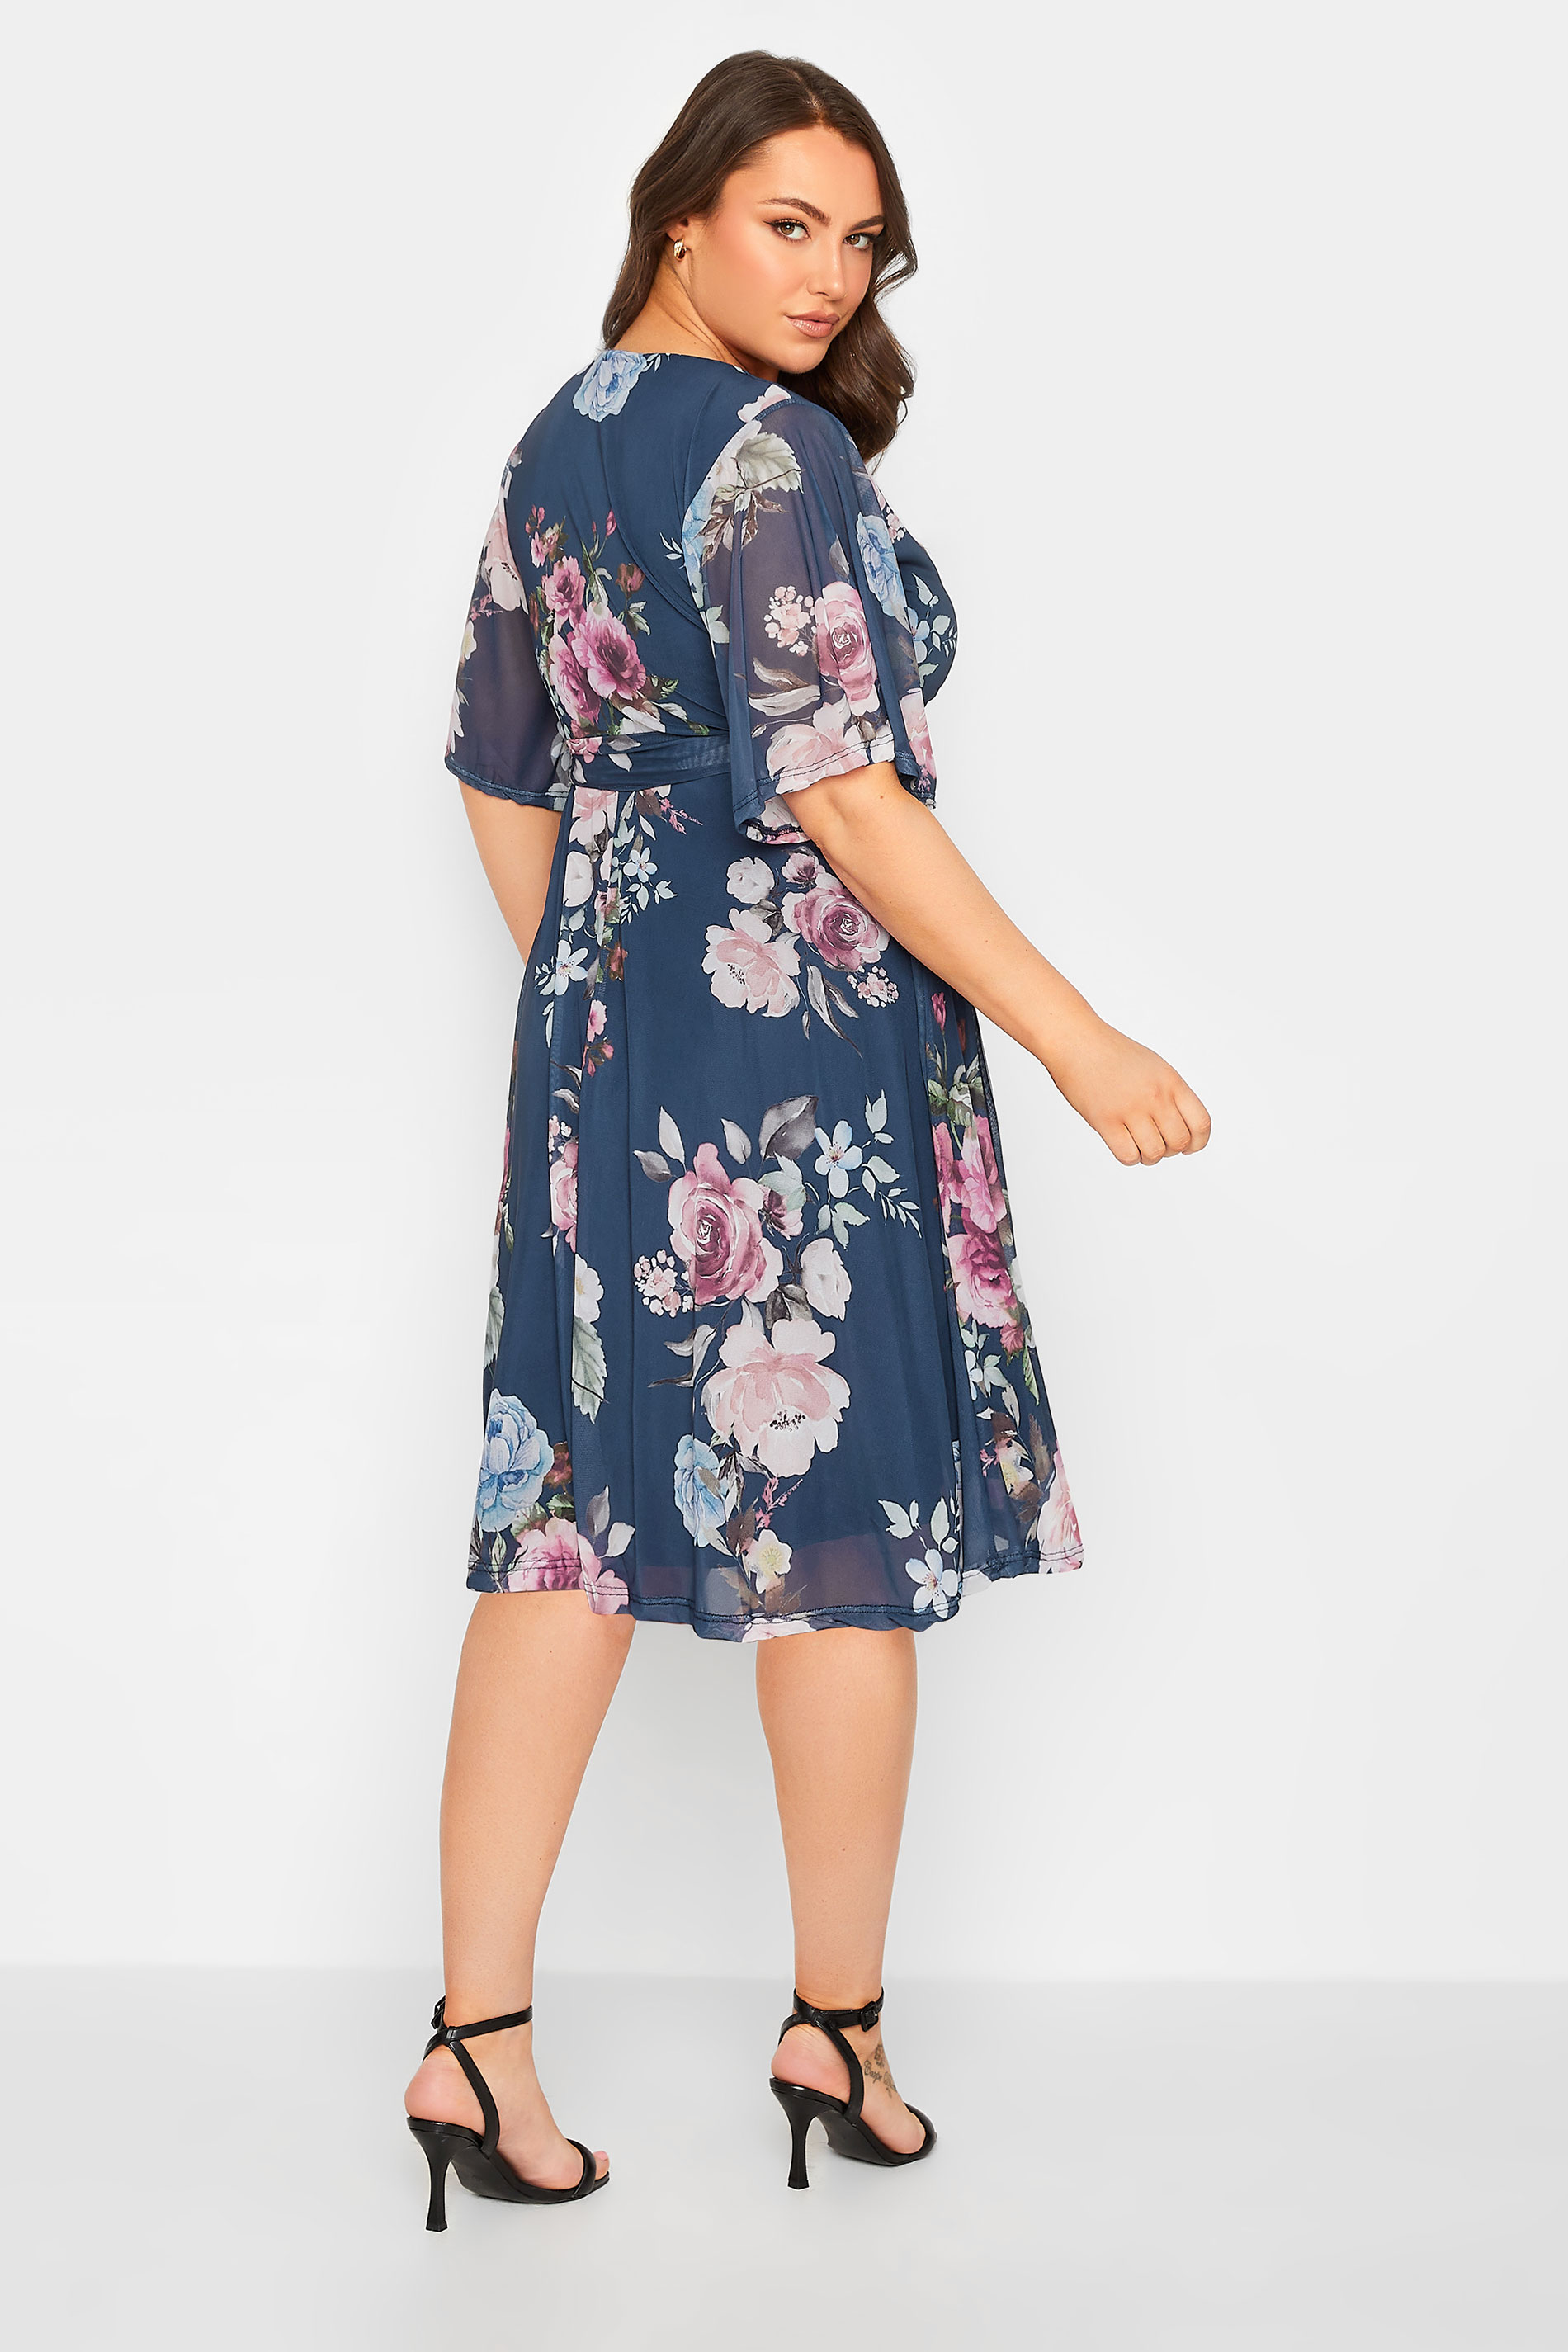 YOURS PETITE Plus Size Navy Blue Floral Print Mesh Midi Wrap Dress | Yours Clothing 3